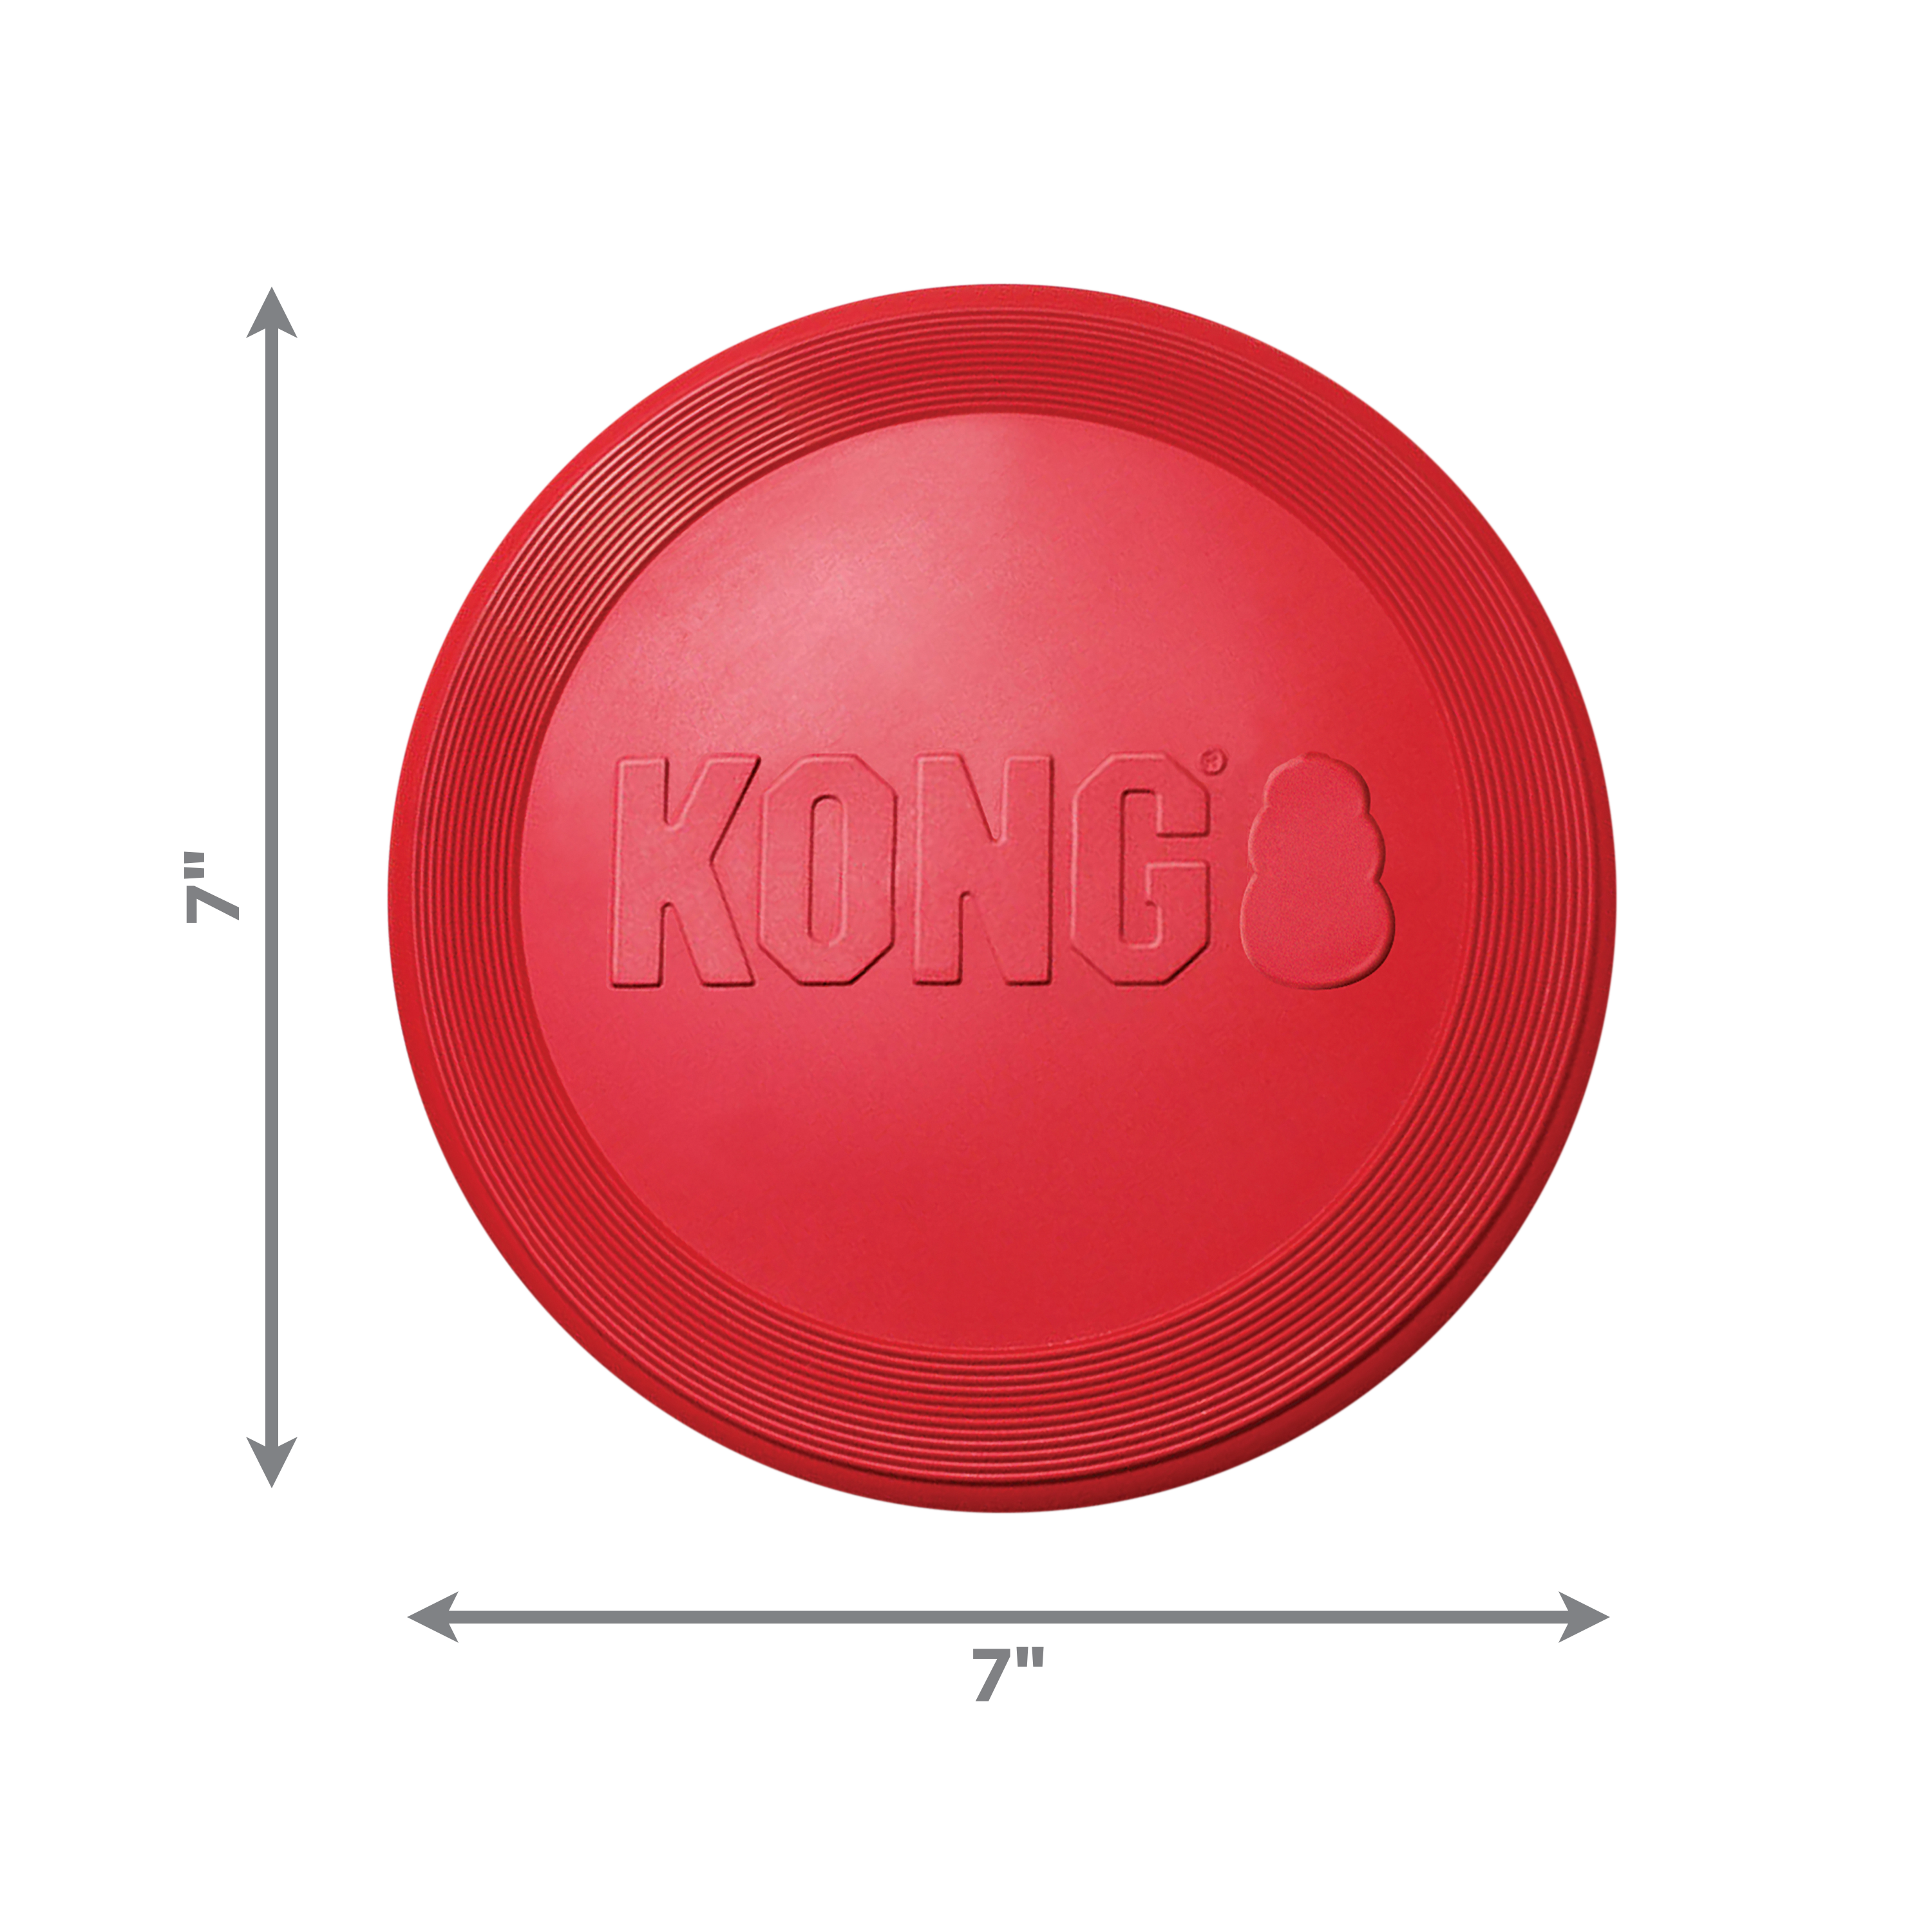 KONG Flyer product image